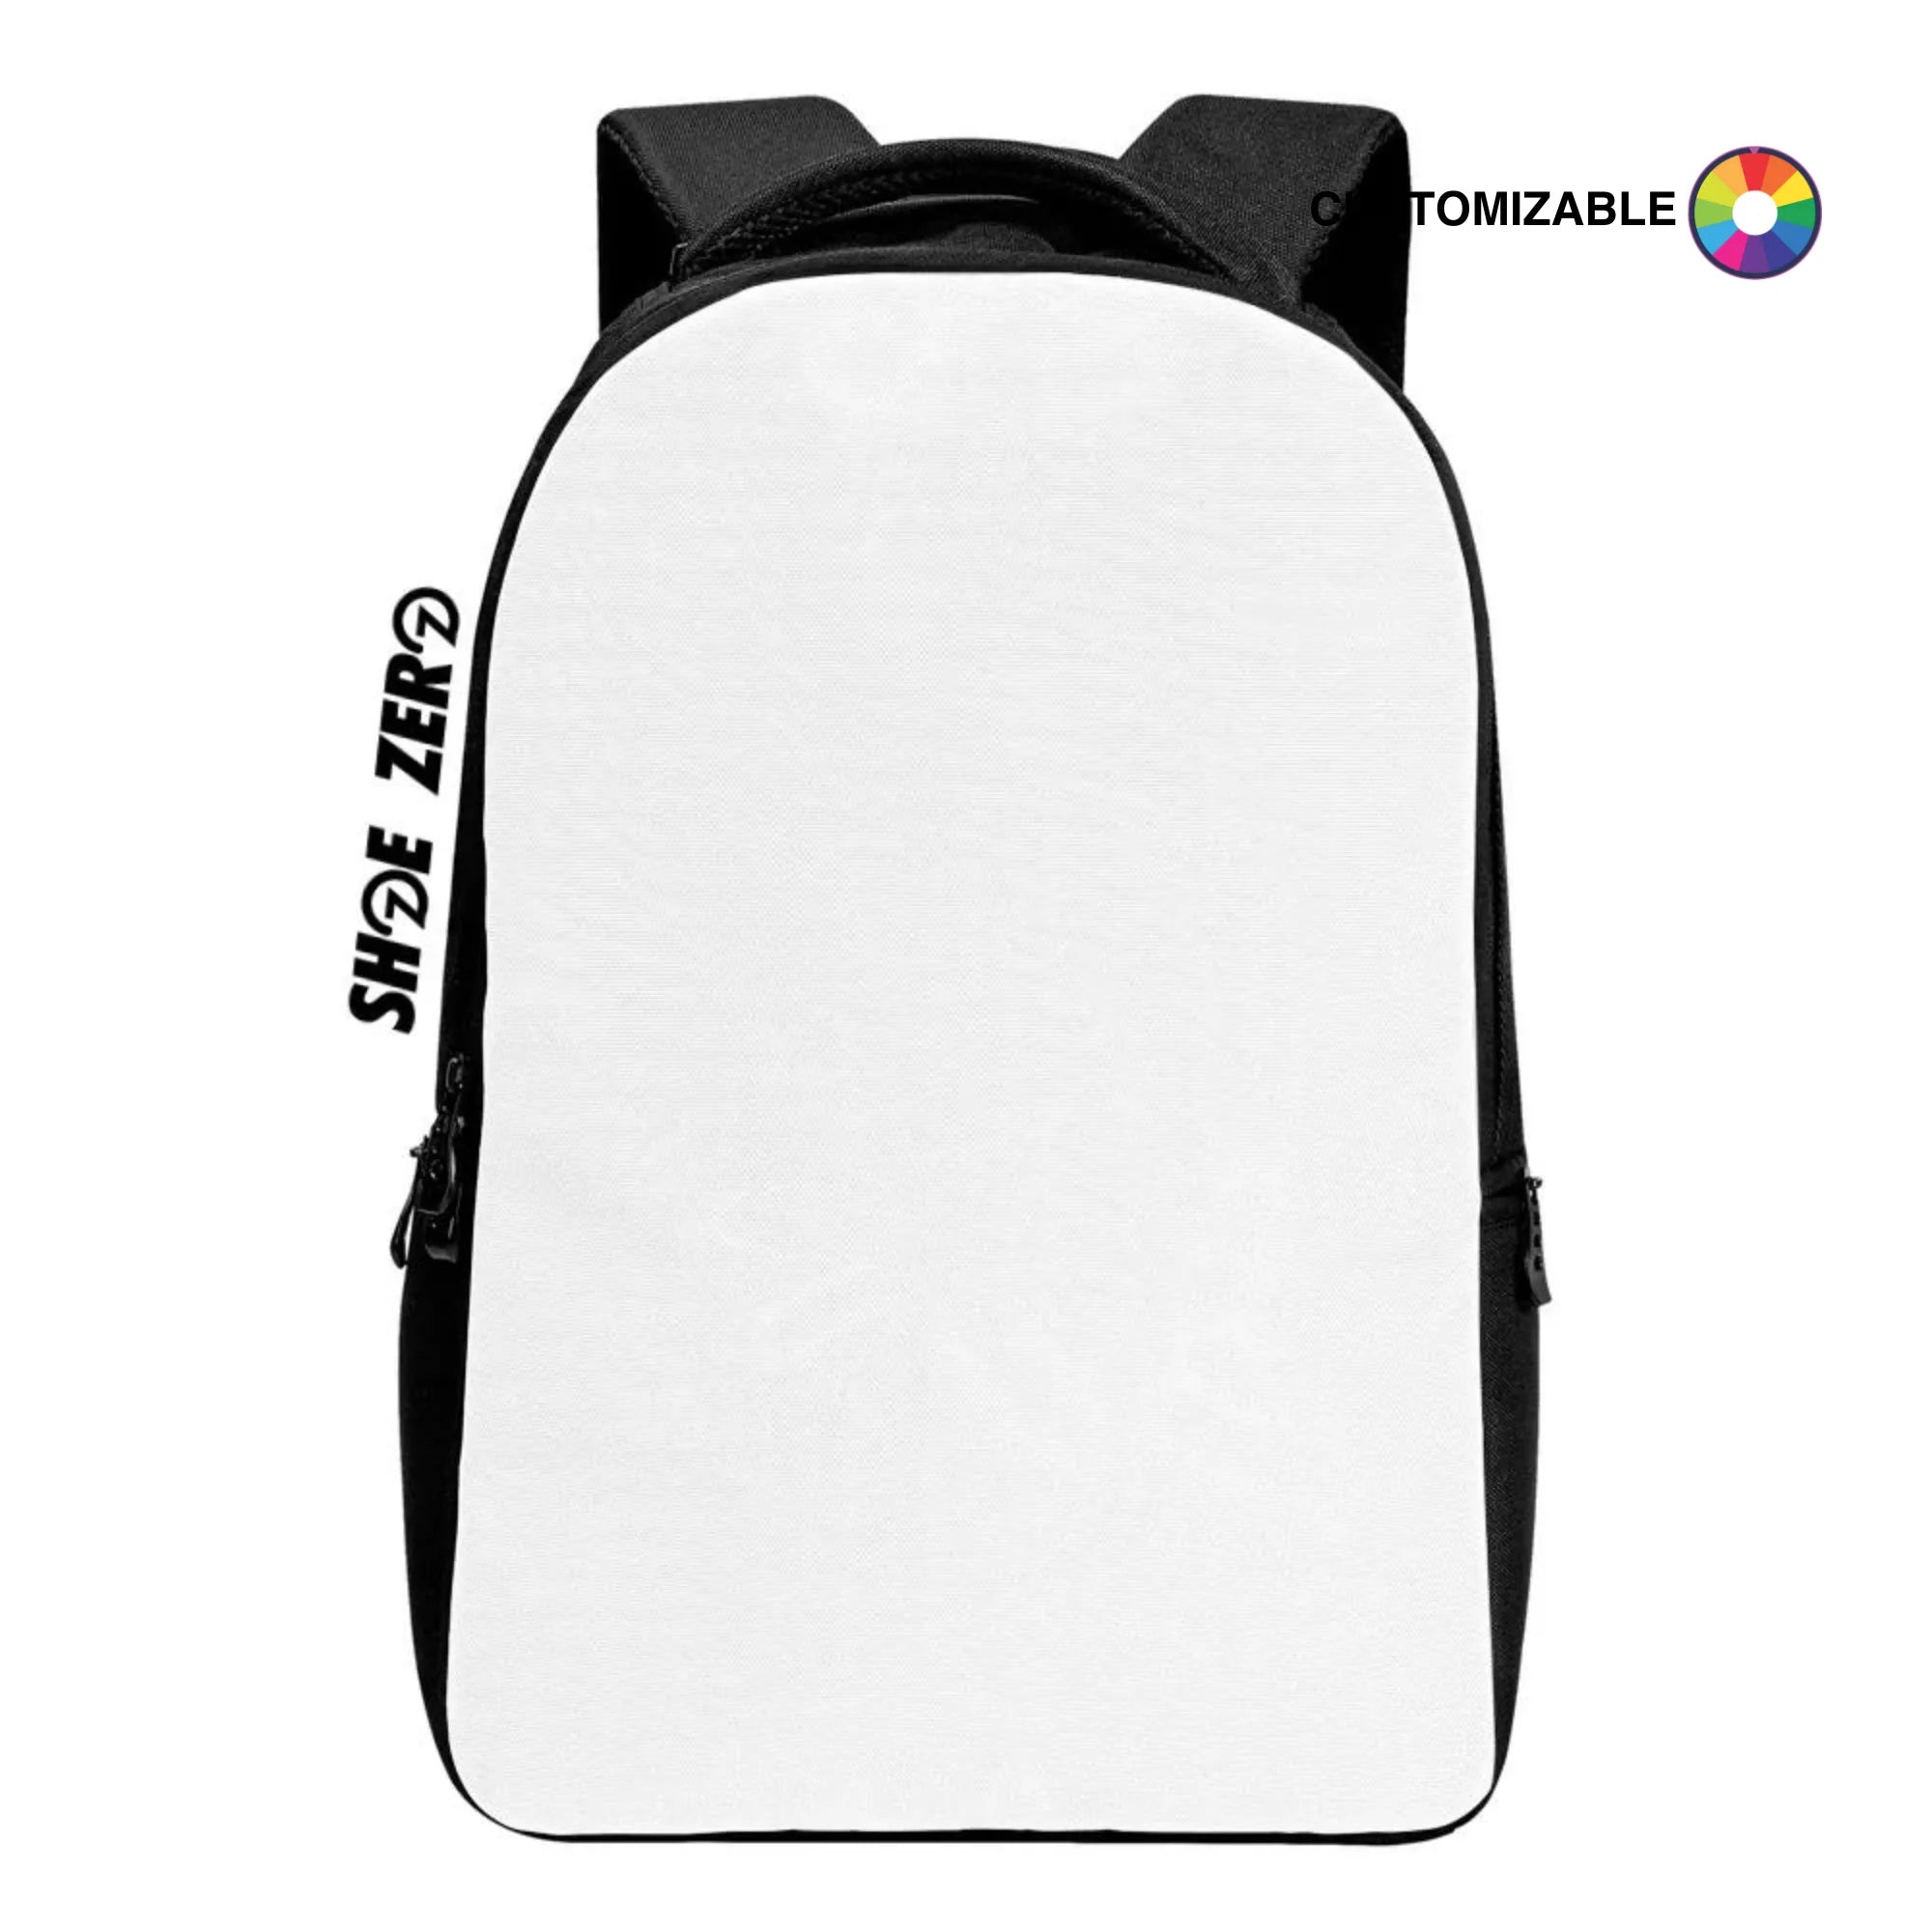 Customizable Laptop Backpack